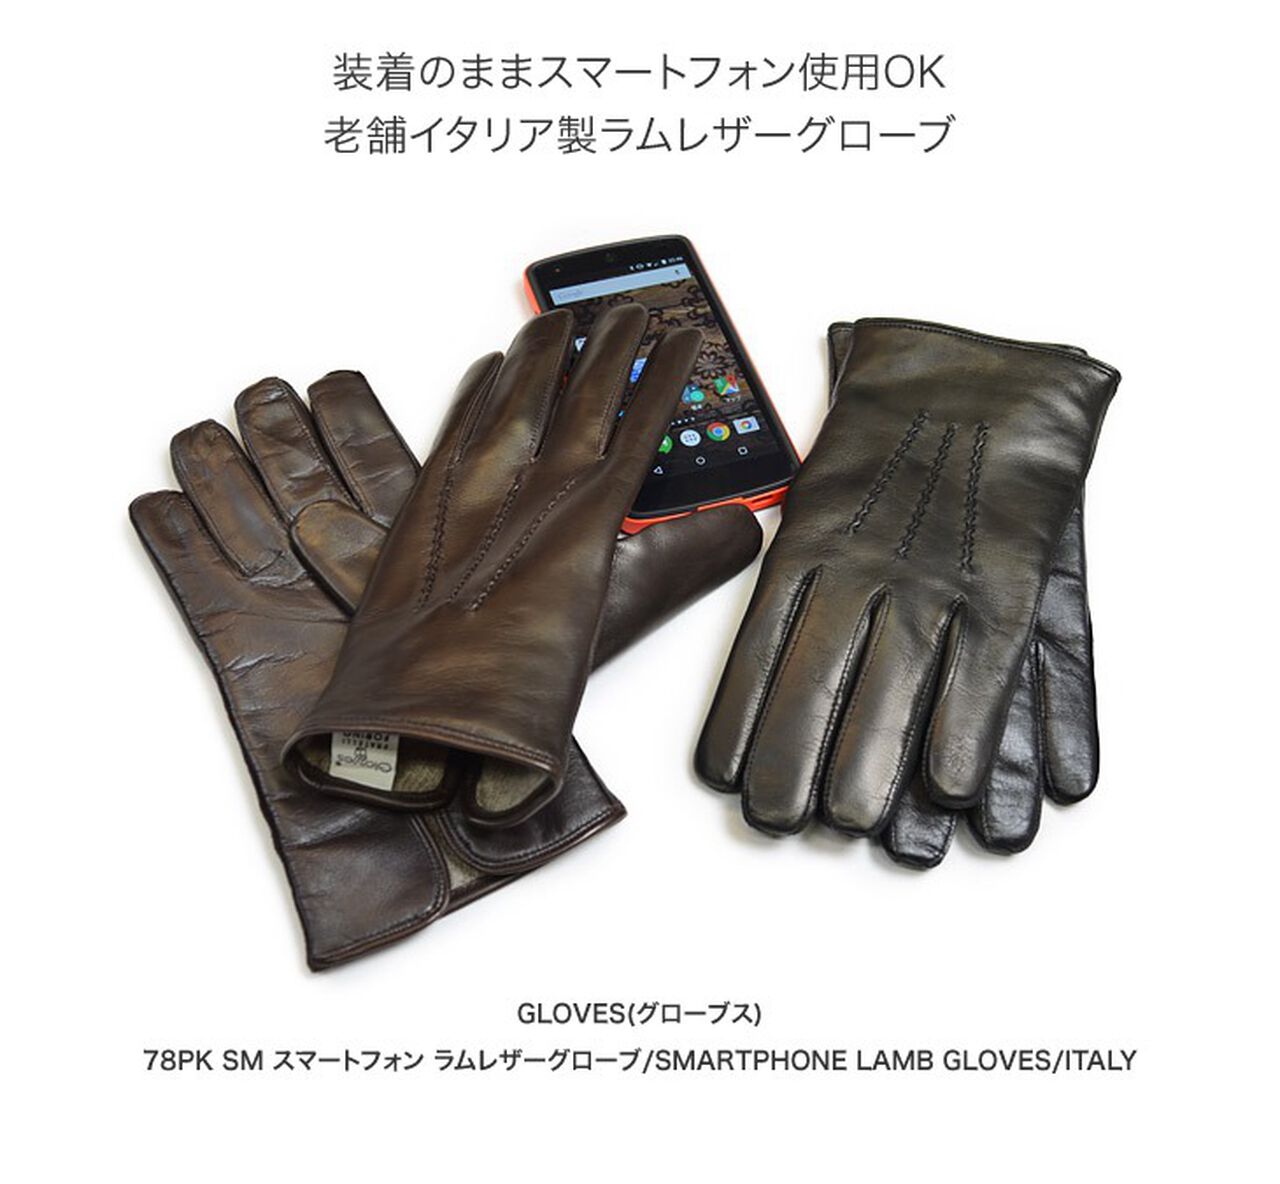 78PK-SM Smartphone Lamb Leather Gloves,Brown, large image number 2